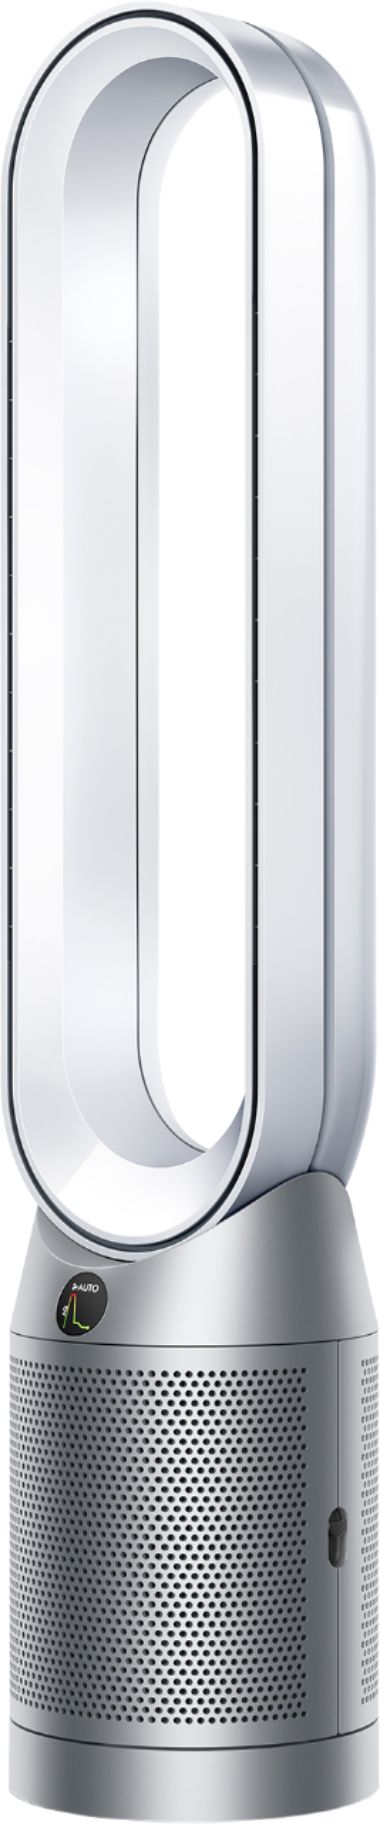 Dyson - Purifier Cool - TP07 - Smart Air Purifier and Fan - White/Silver_1